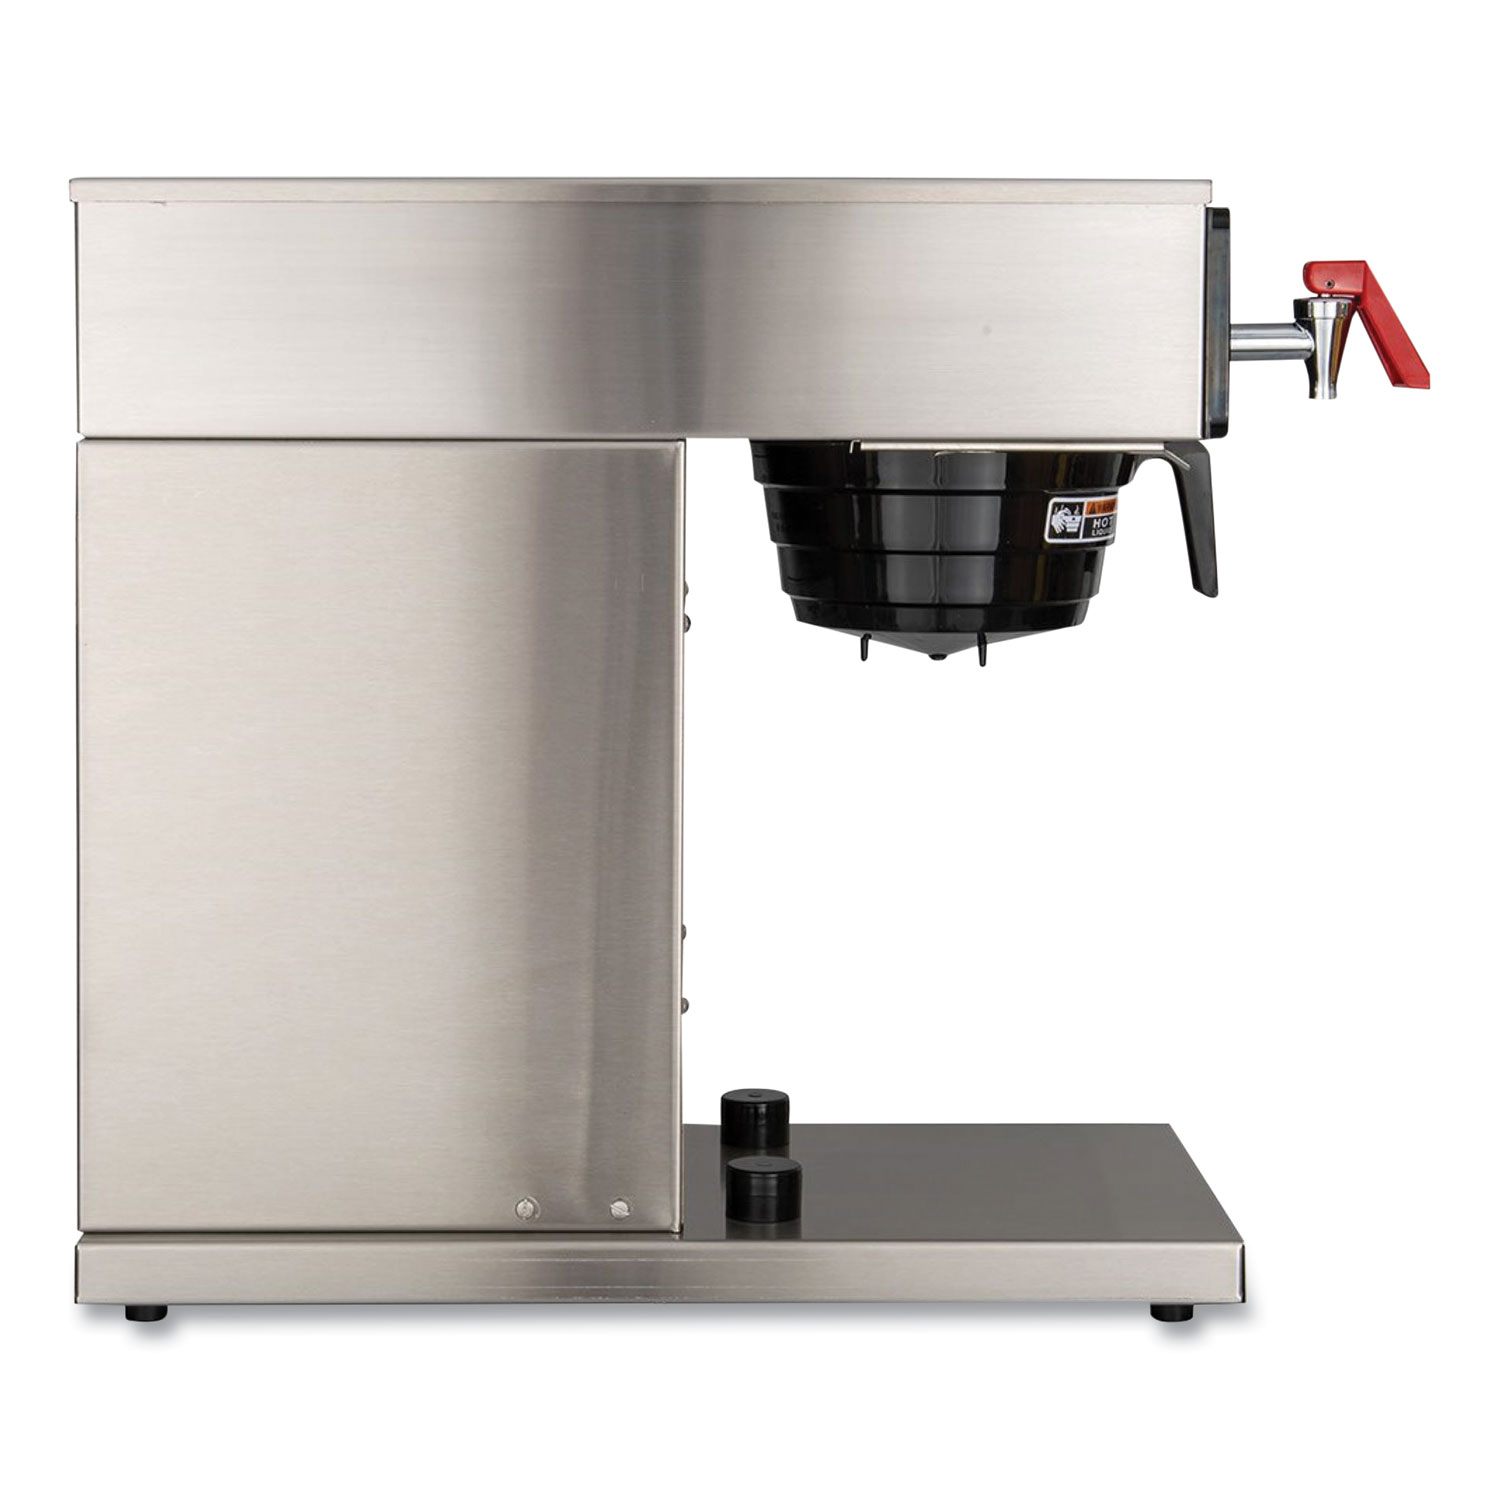 Bunn 38700.0011 Axiom DV-TC Thermal Carafe Coffee Brewer Dual Voltage